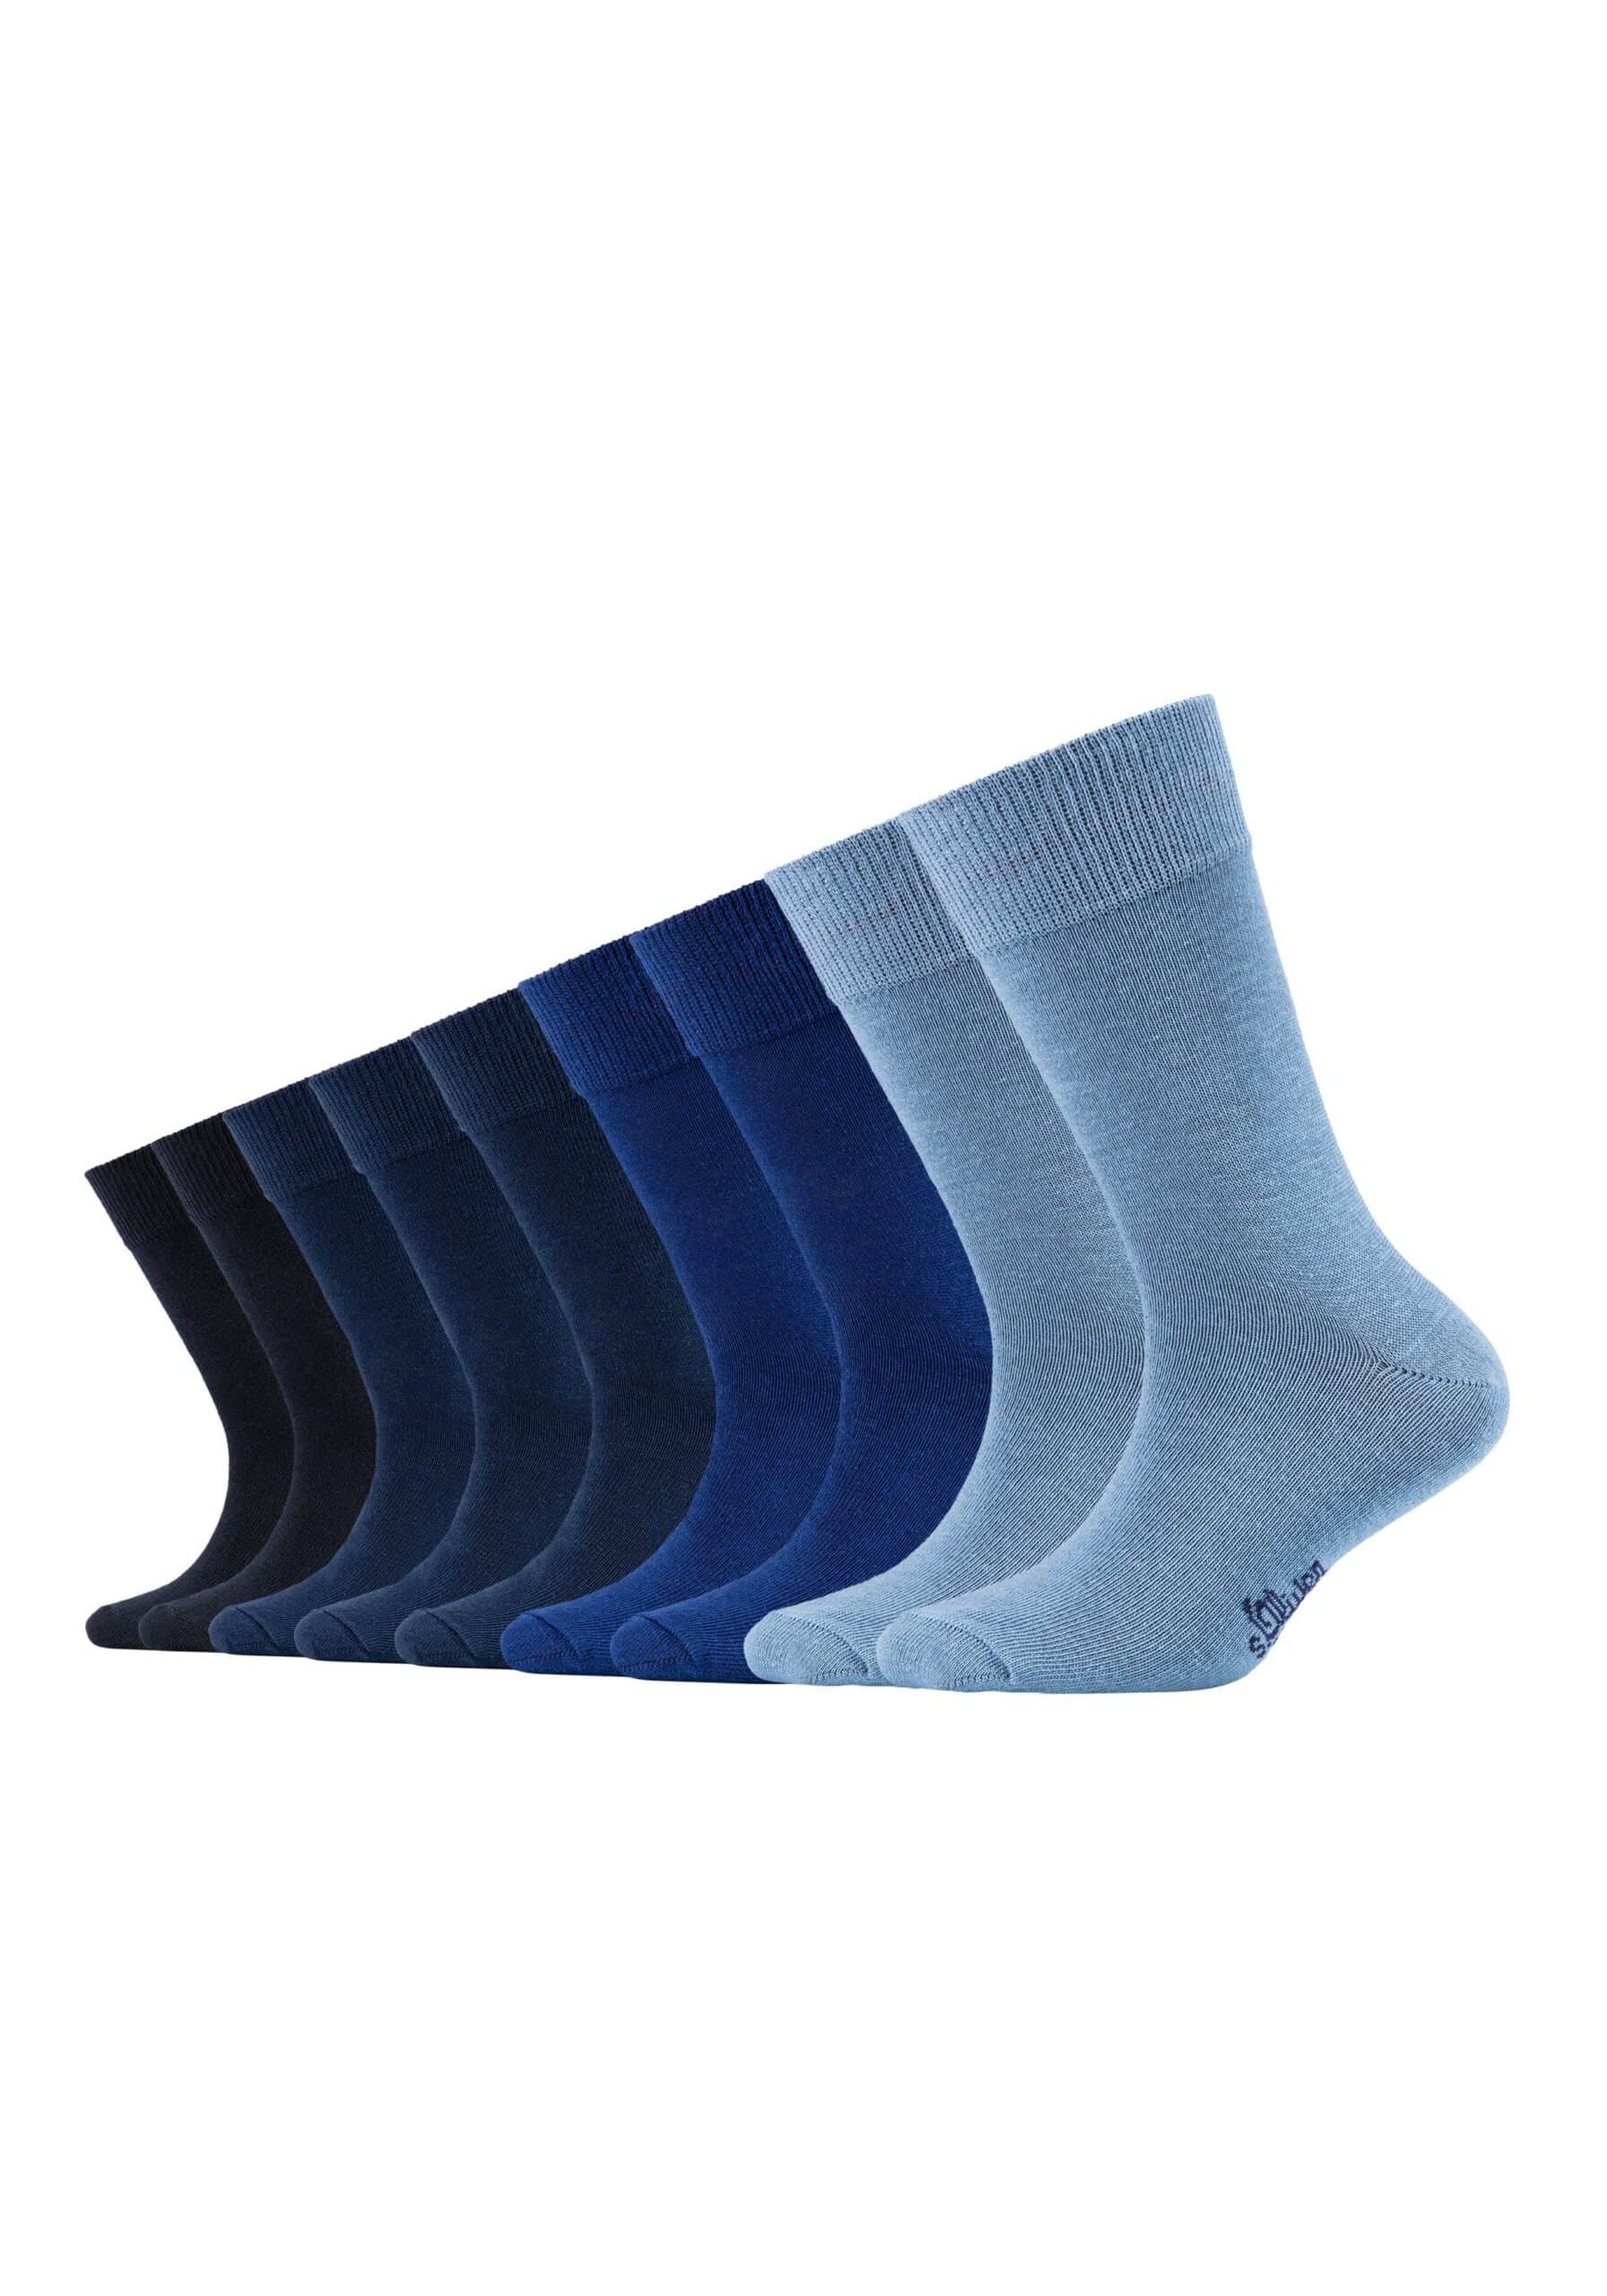 s.Oliver Kinder Socken Essentials 9er Pack blue kaufen bei